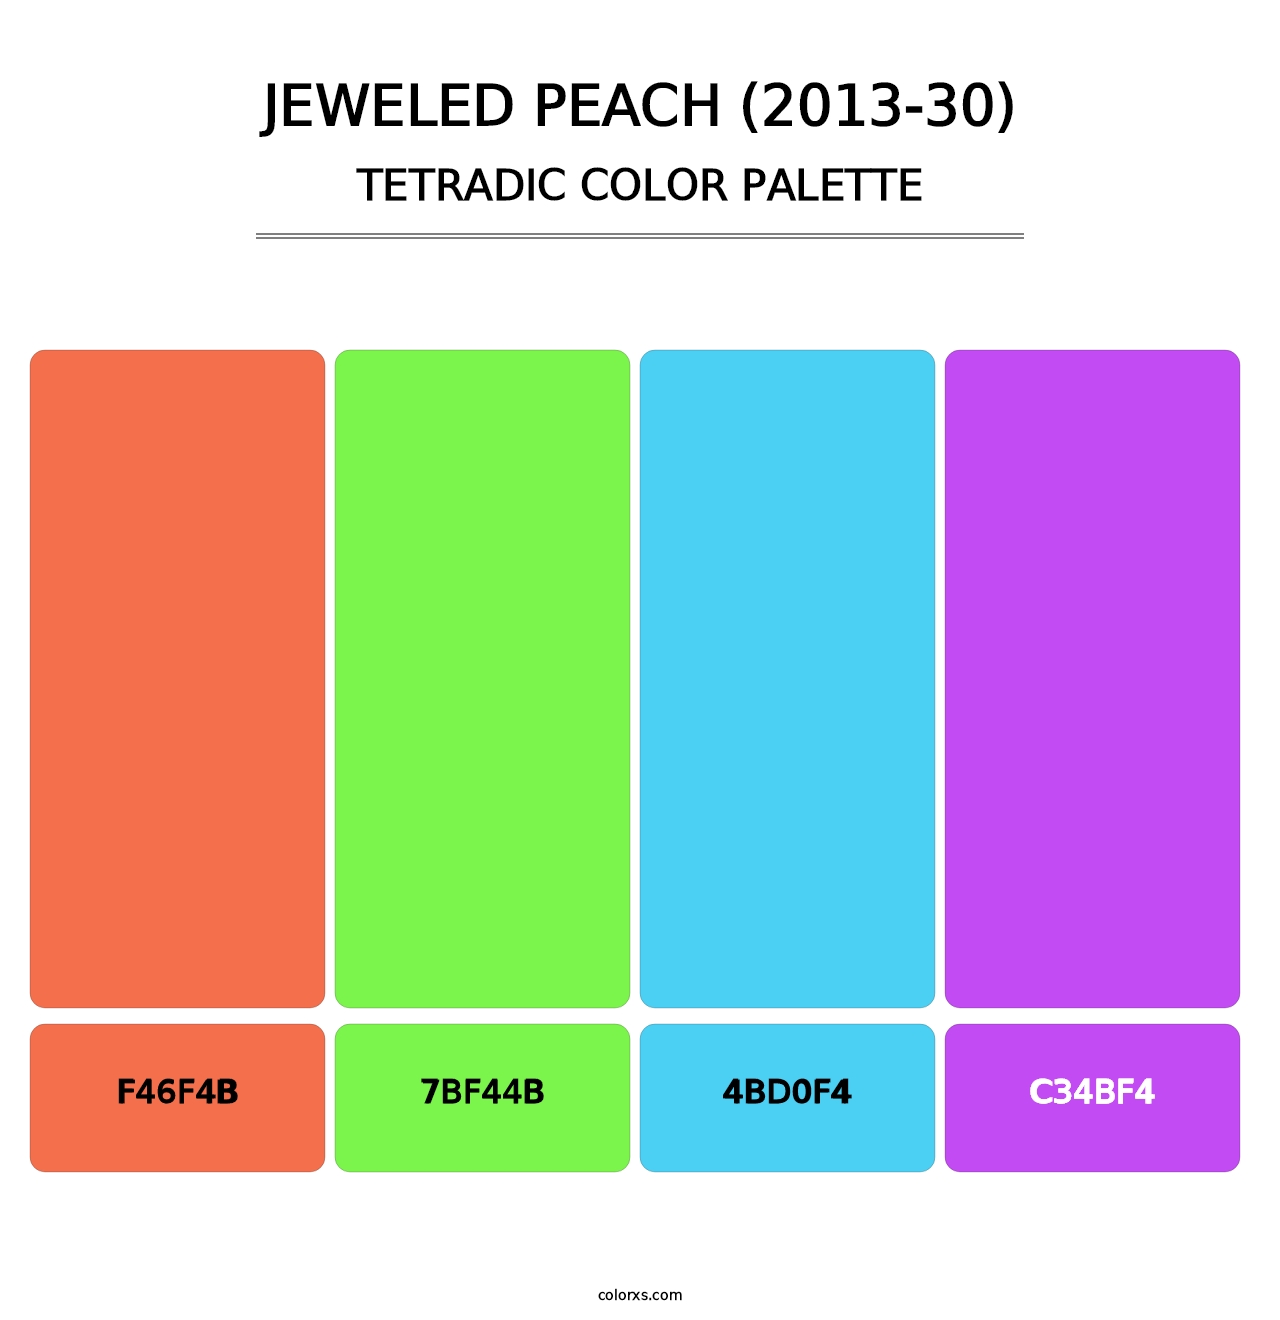 Jeweled Peach (2013-30) - Tetradic Color Palette